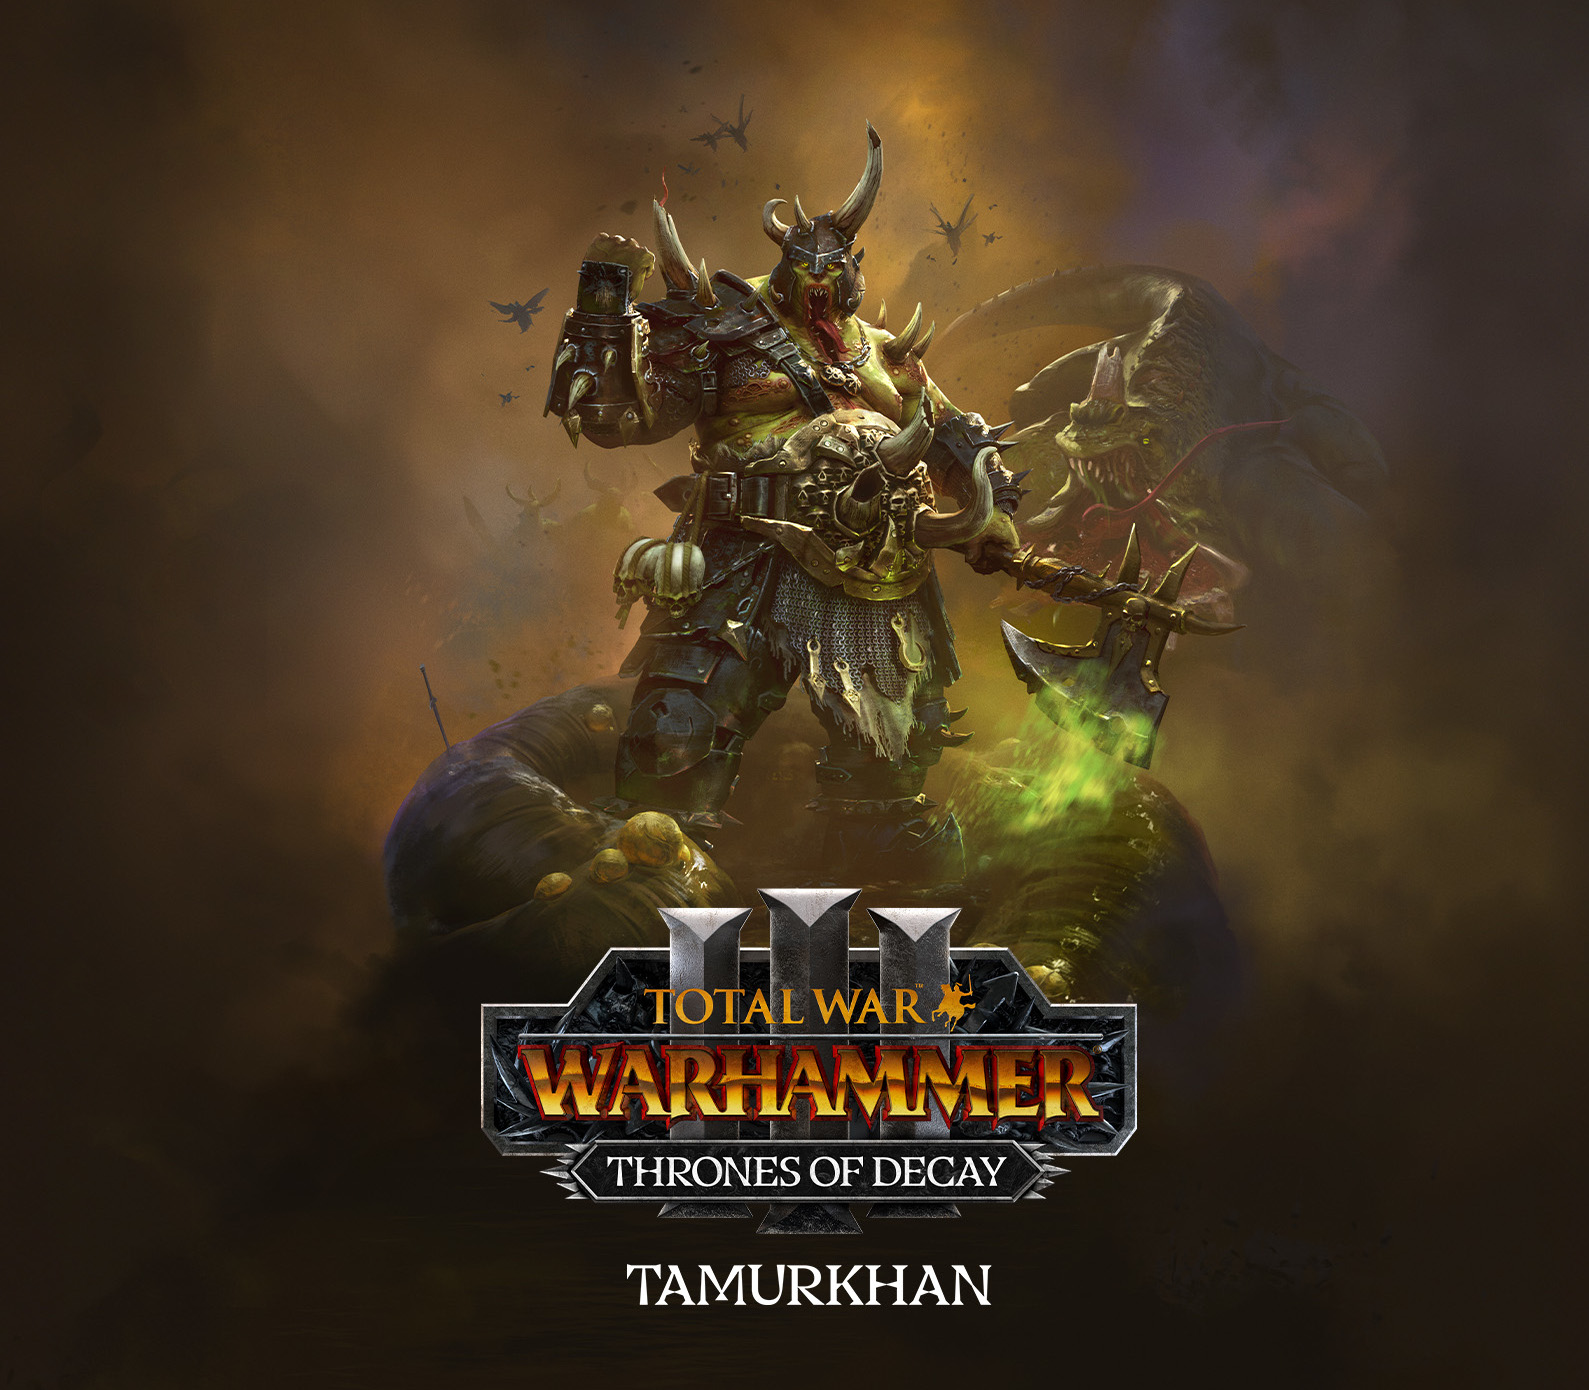 Total War: WARHAMMER III + Tamurkhan – Thrones of Decay DLC Bundle PC Steam Account